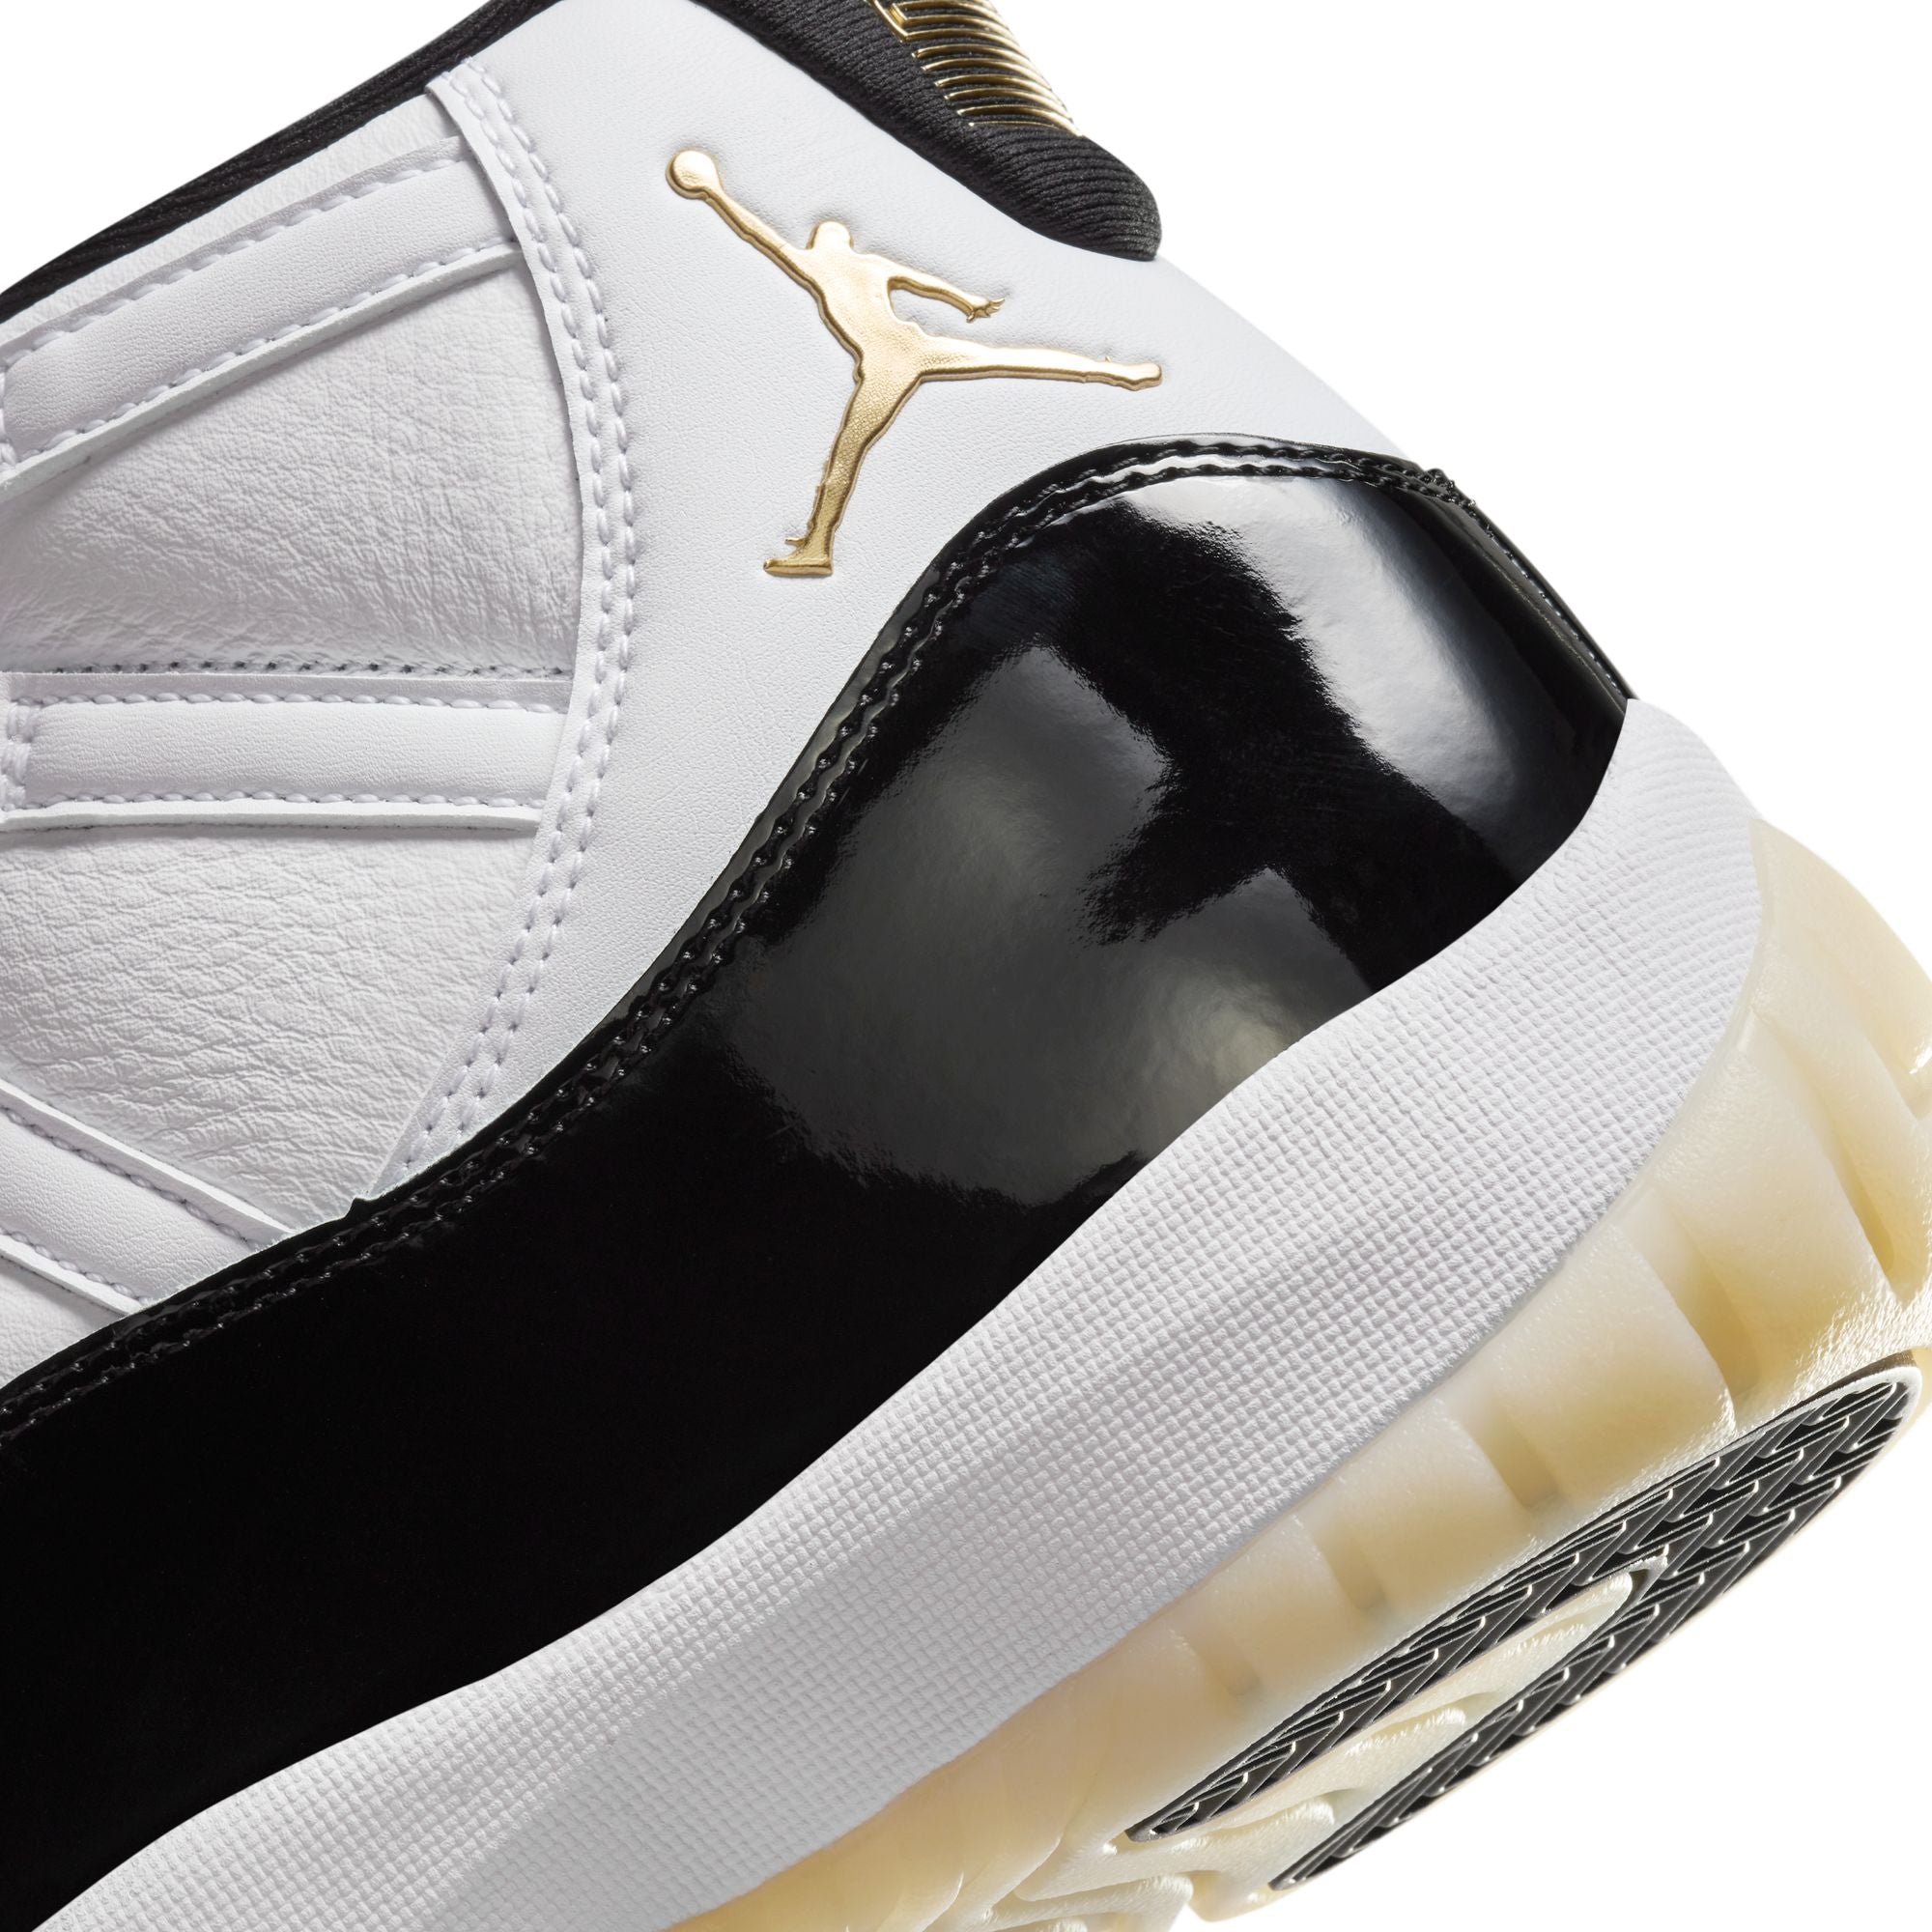 Air Jordan 11 Retro Men's Shoes